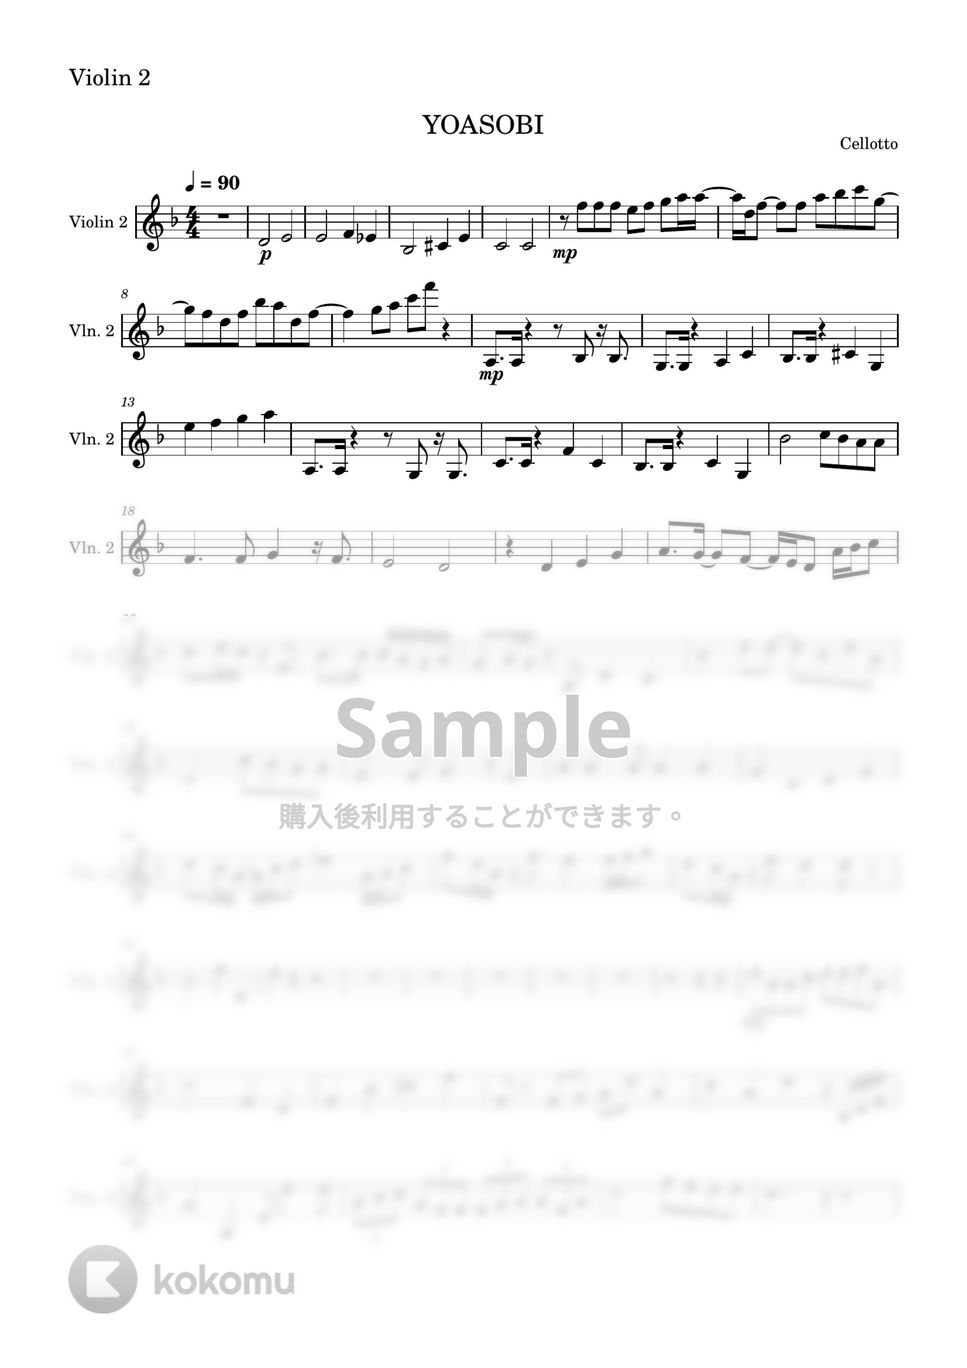 YOASOBI - 優しい彗星 (ヴァイオリン2-弦楽四重奏) by Cellotto